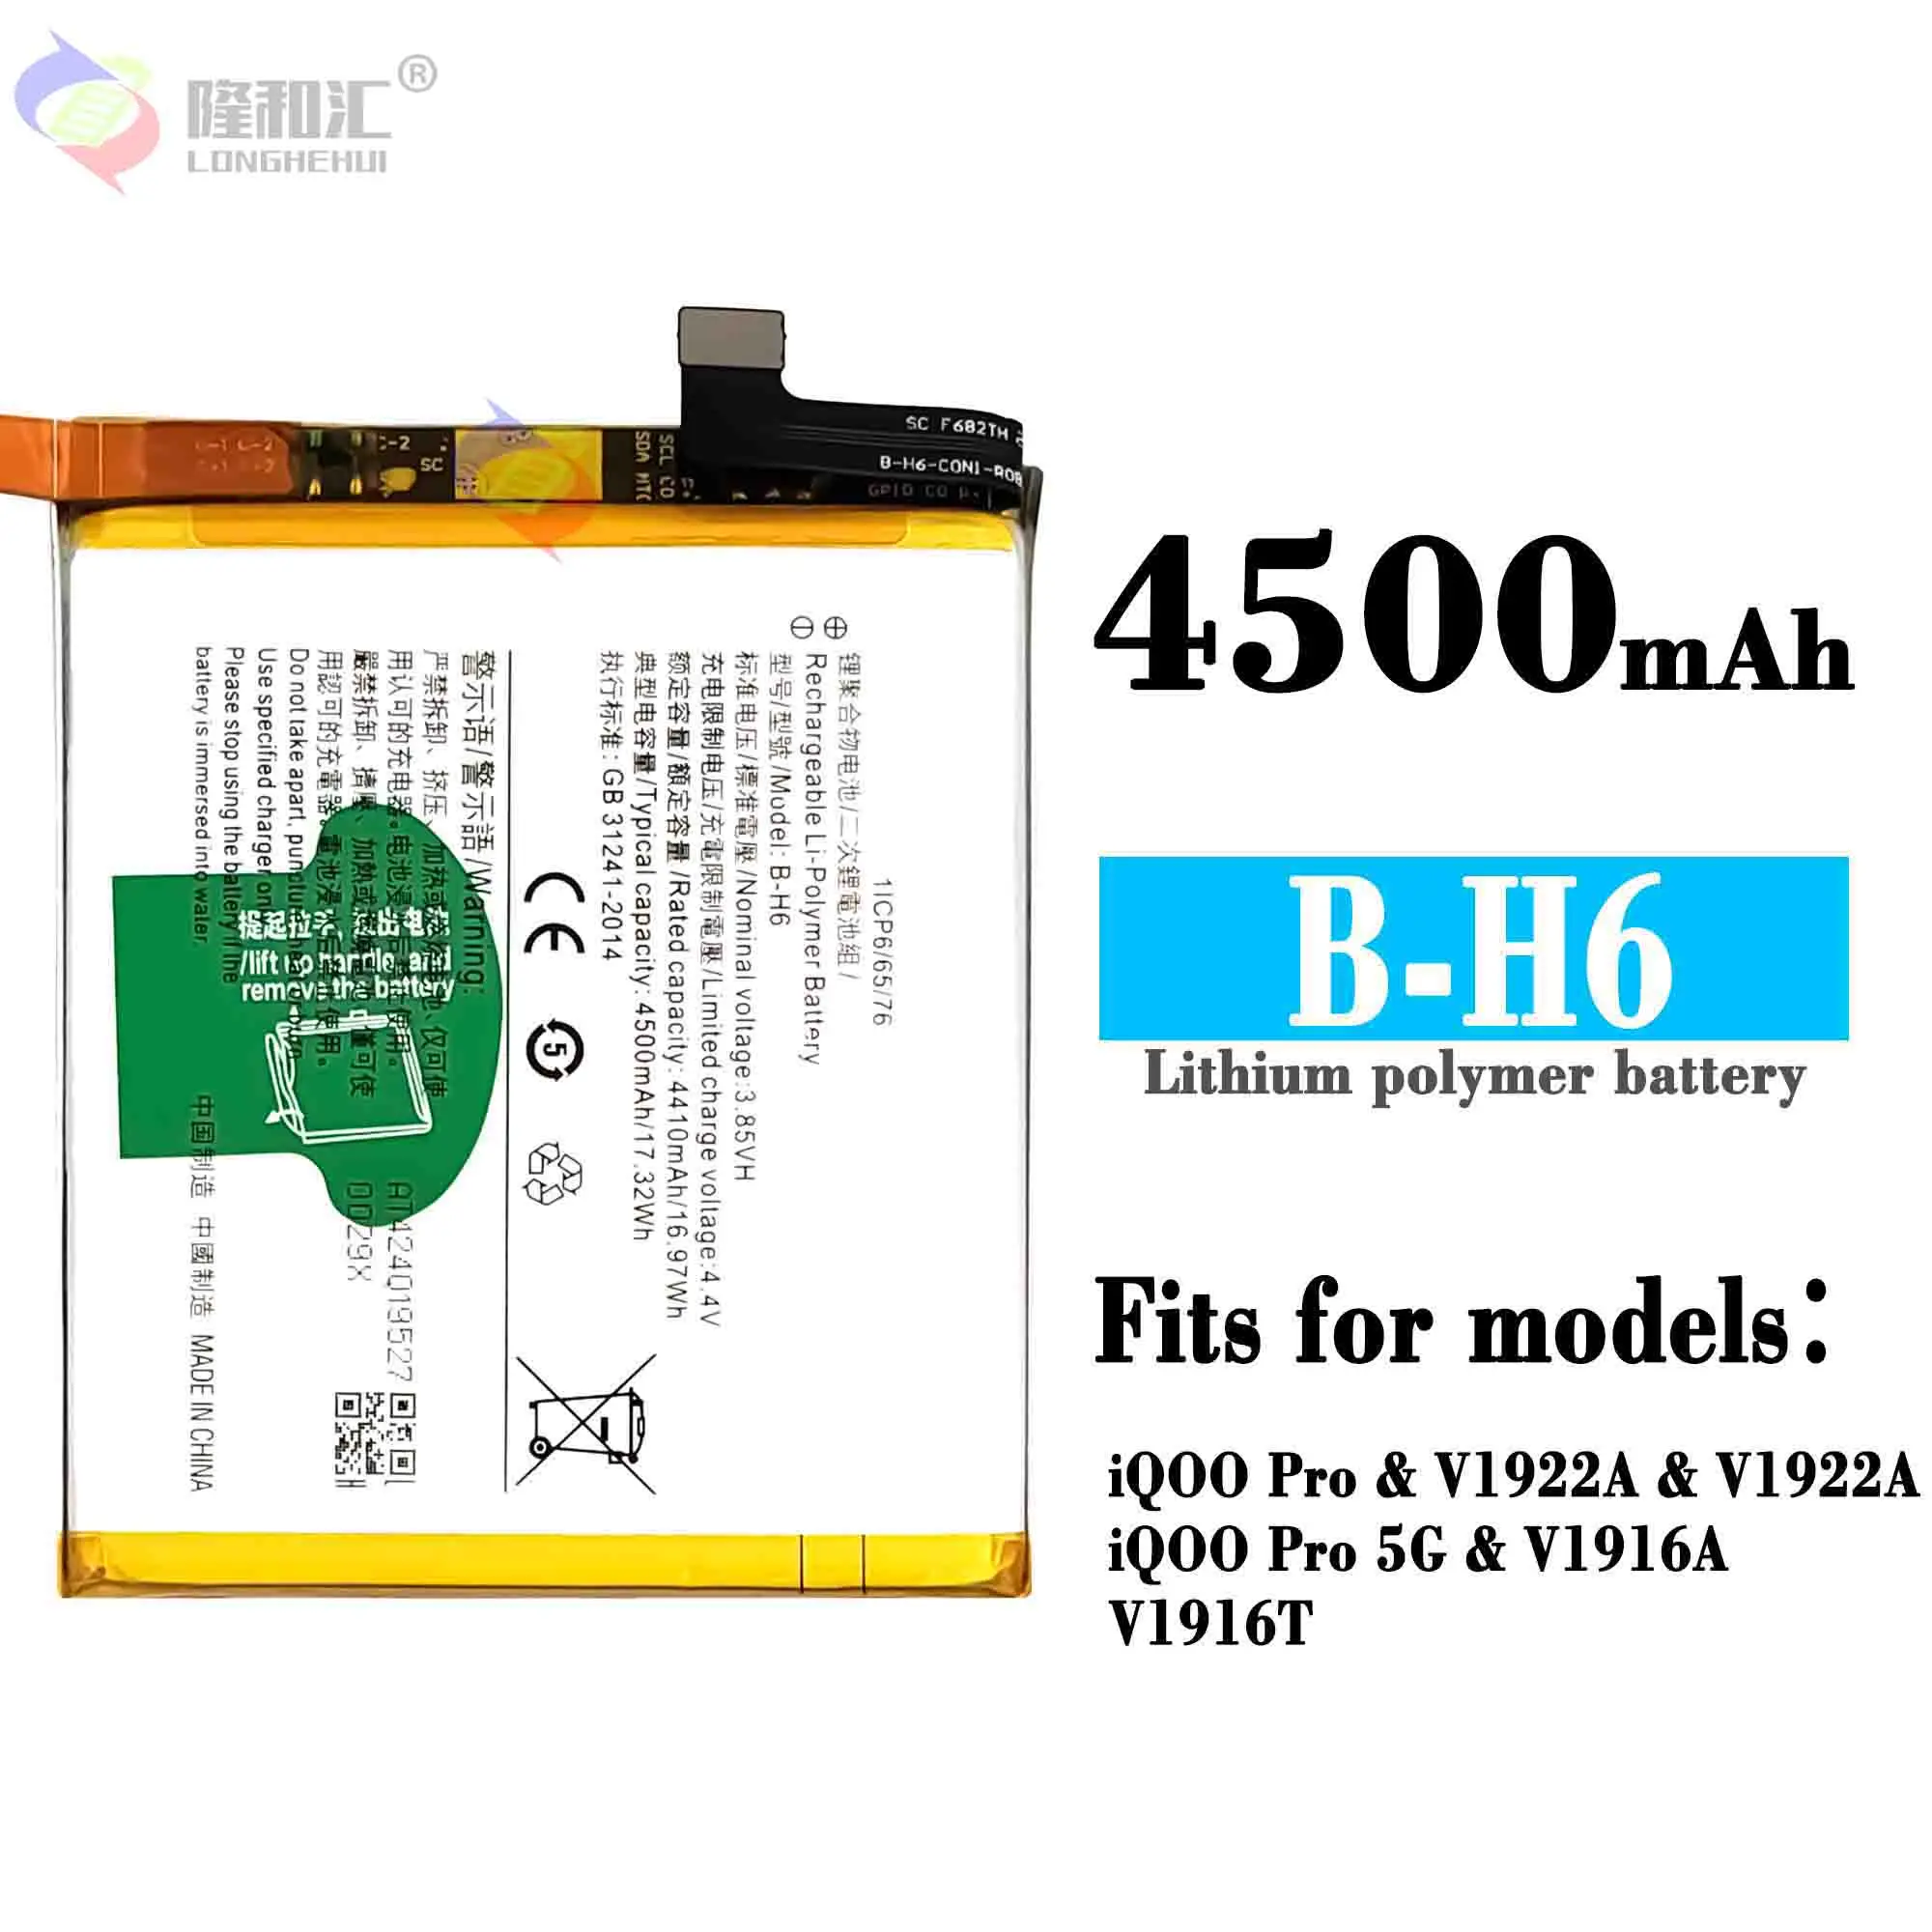 New Original B-H6 Battery for VIVO IQOO Pro 5G 4500mAh Smartphone Replacement Batteries